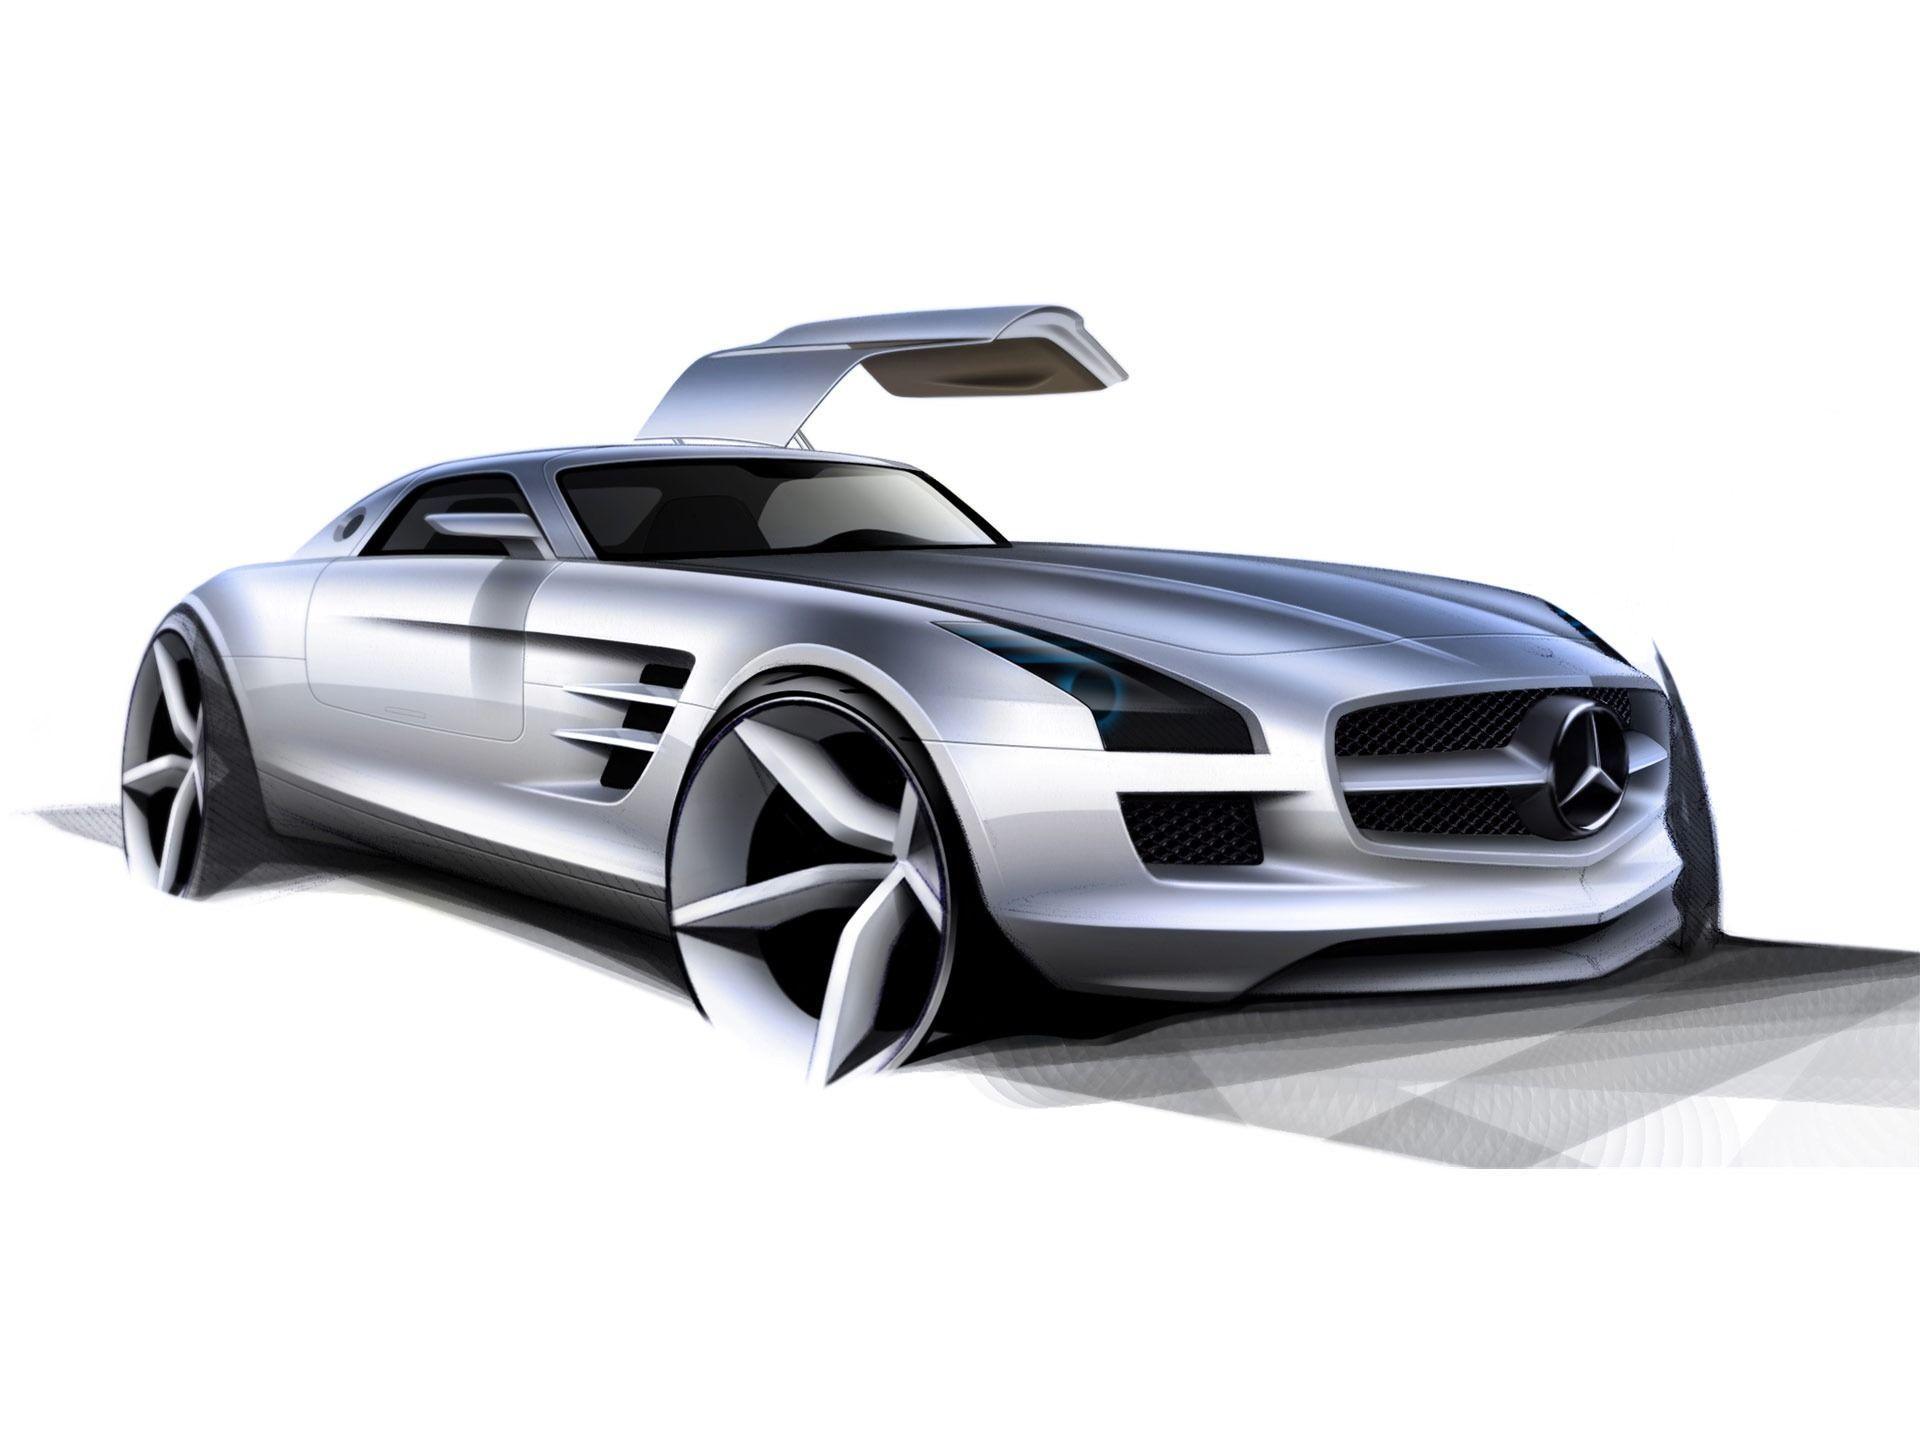 Mercedes Benz SLS AMG Wallpaper Concept Cars Wallpaper in jpg